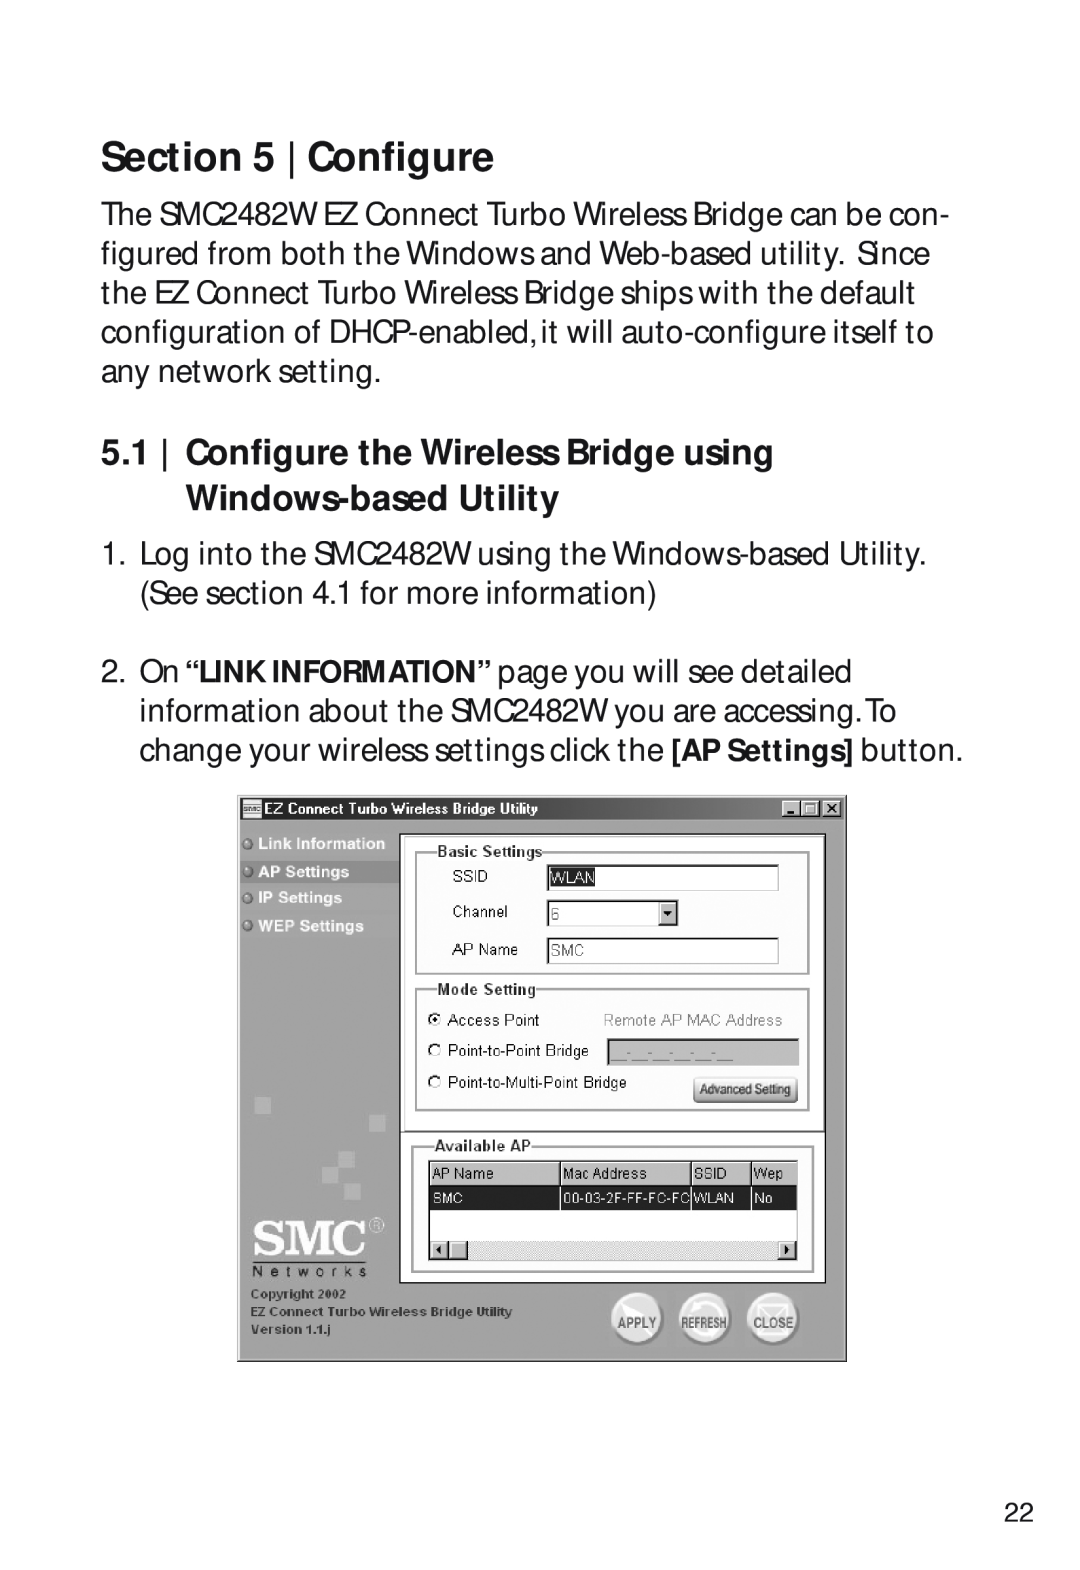 SMC Networks SMC2482W manual Configure the Wireless Bridge using Windows-based Utility 